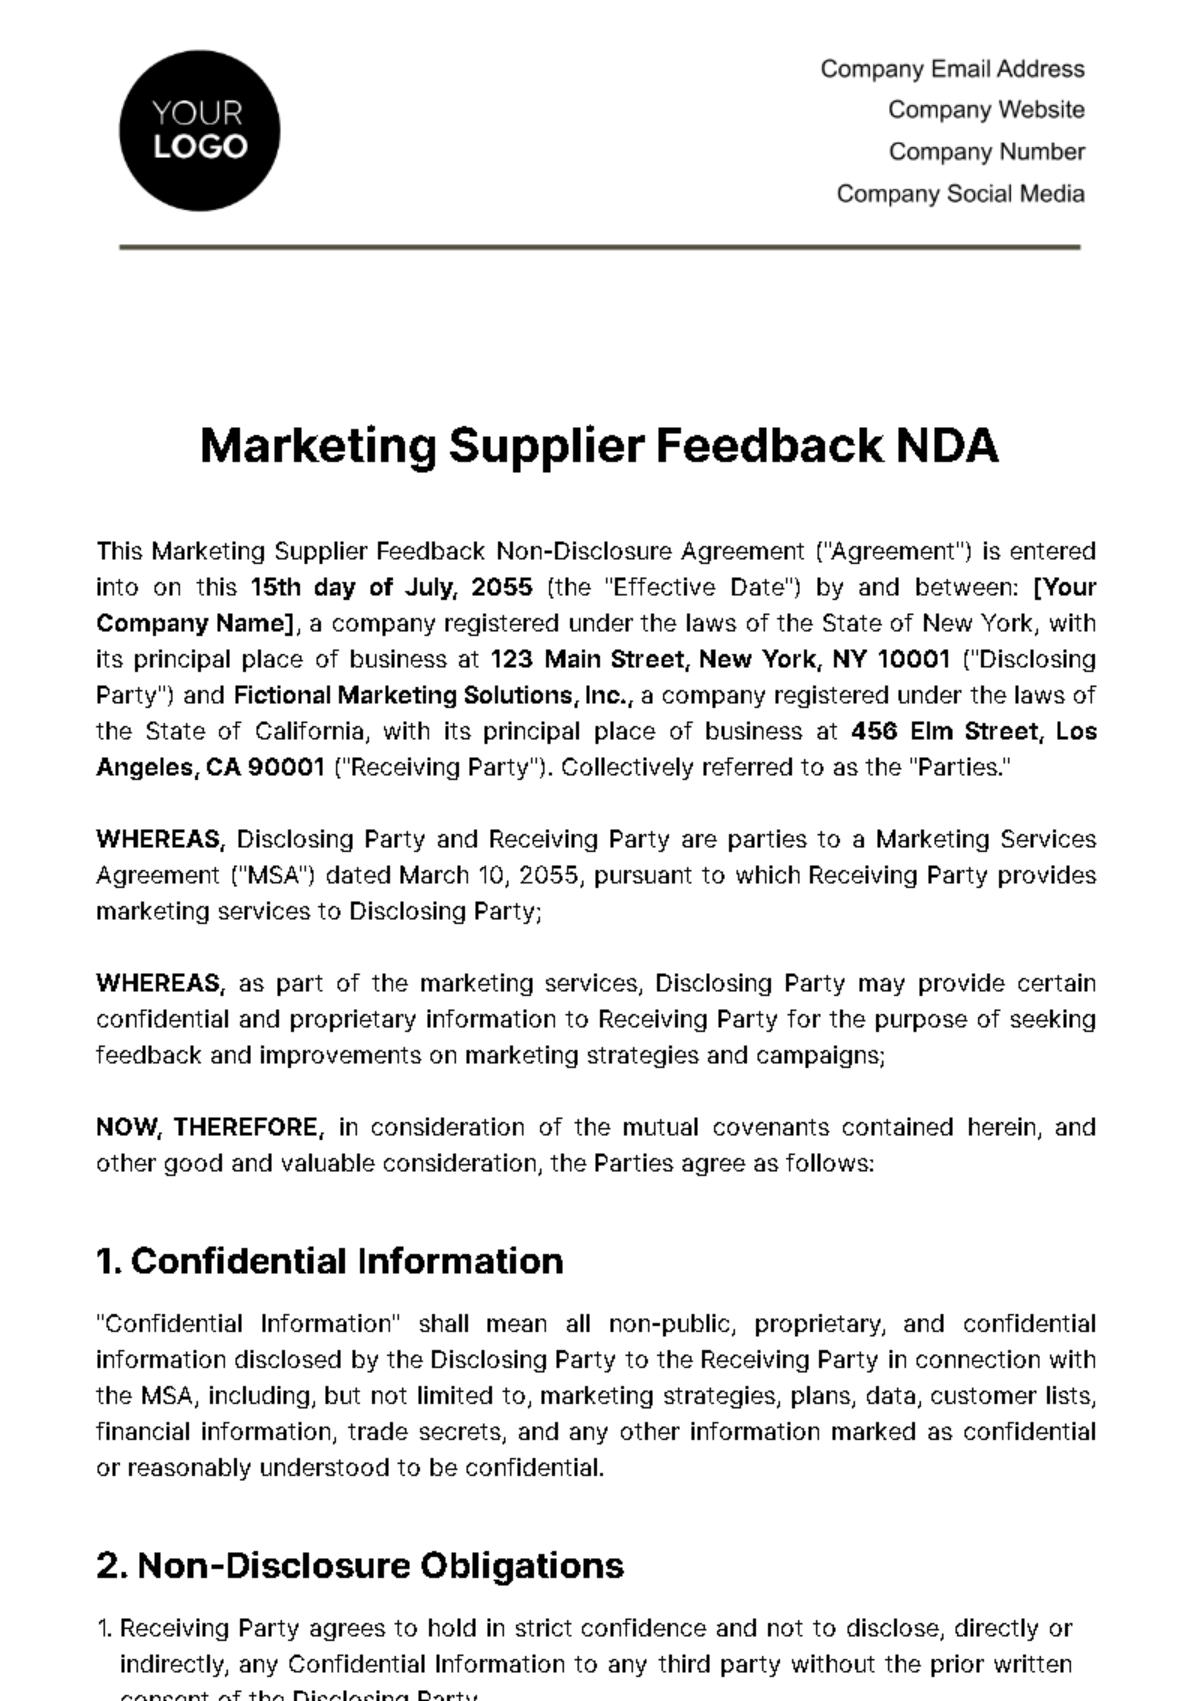 Free Marketing Supplier Feedback NDA Template